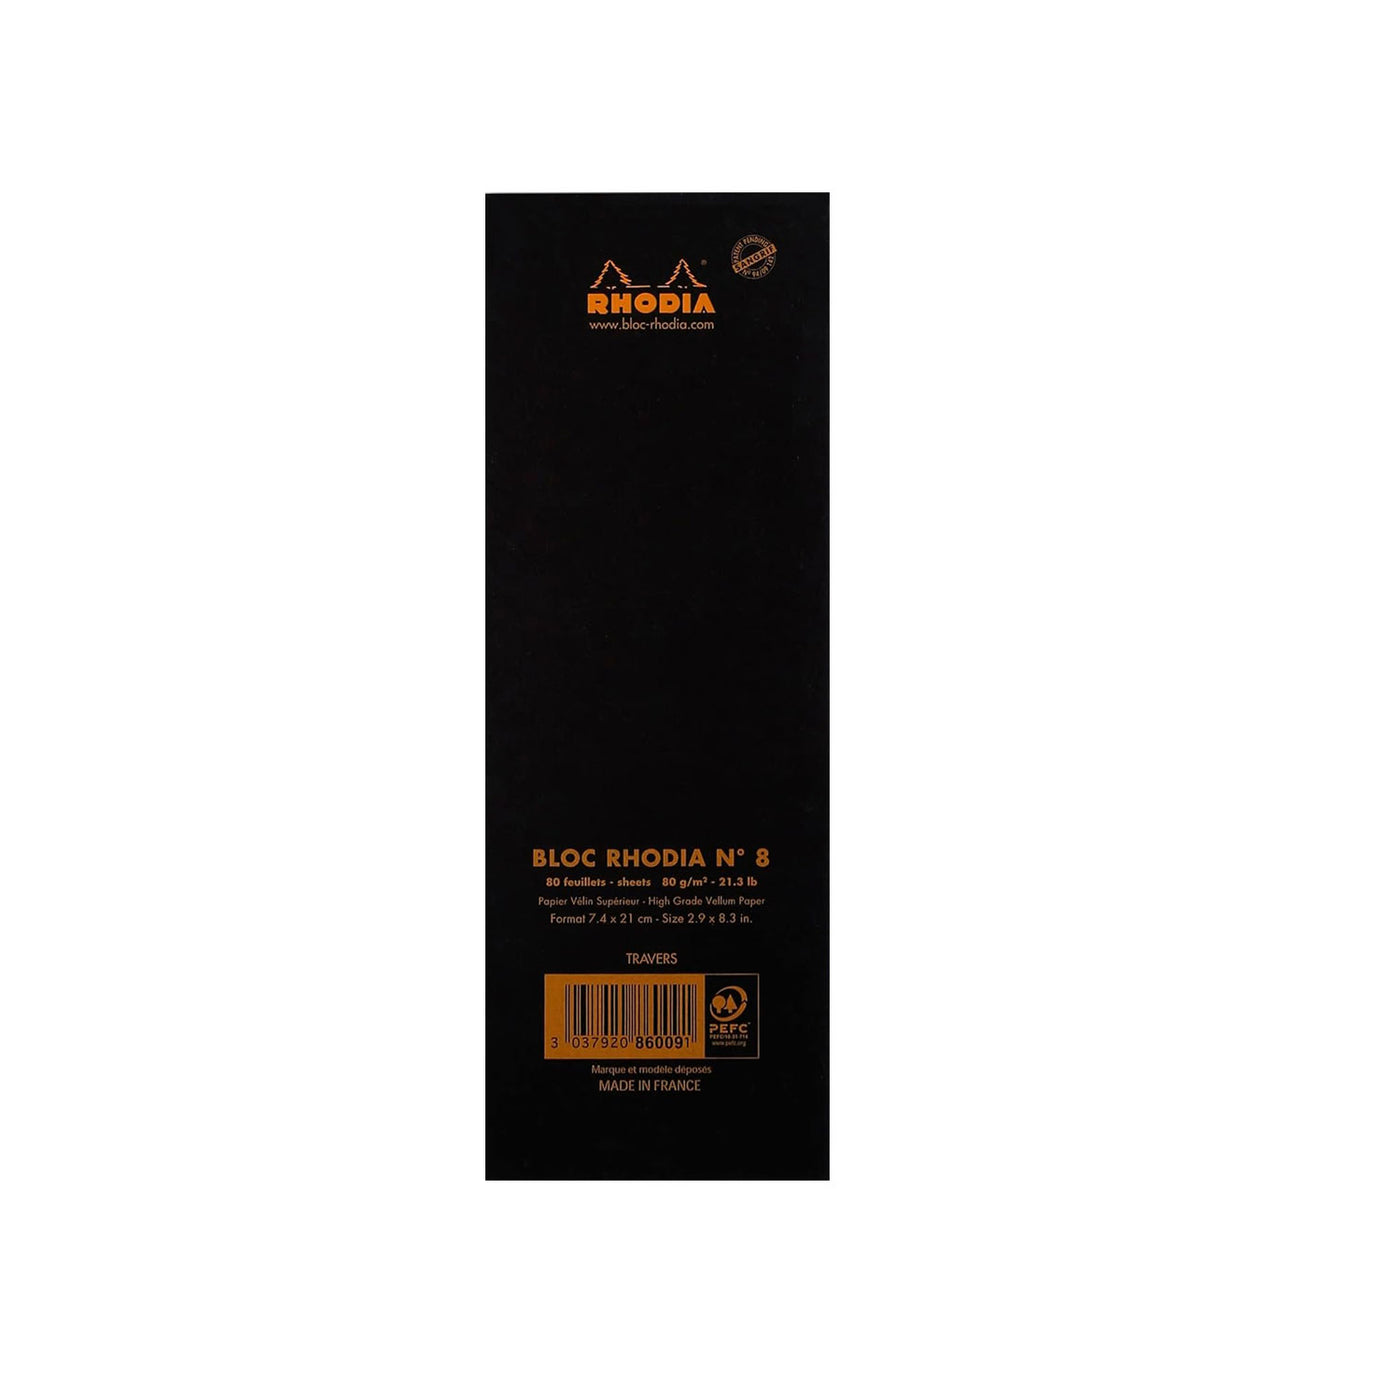 Rhodia No.8 Black Notepad - Ruled 3